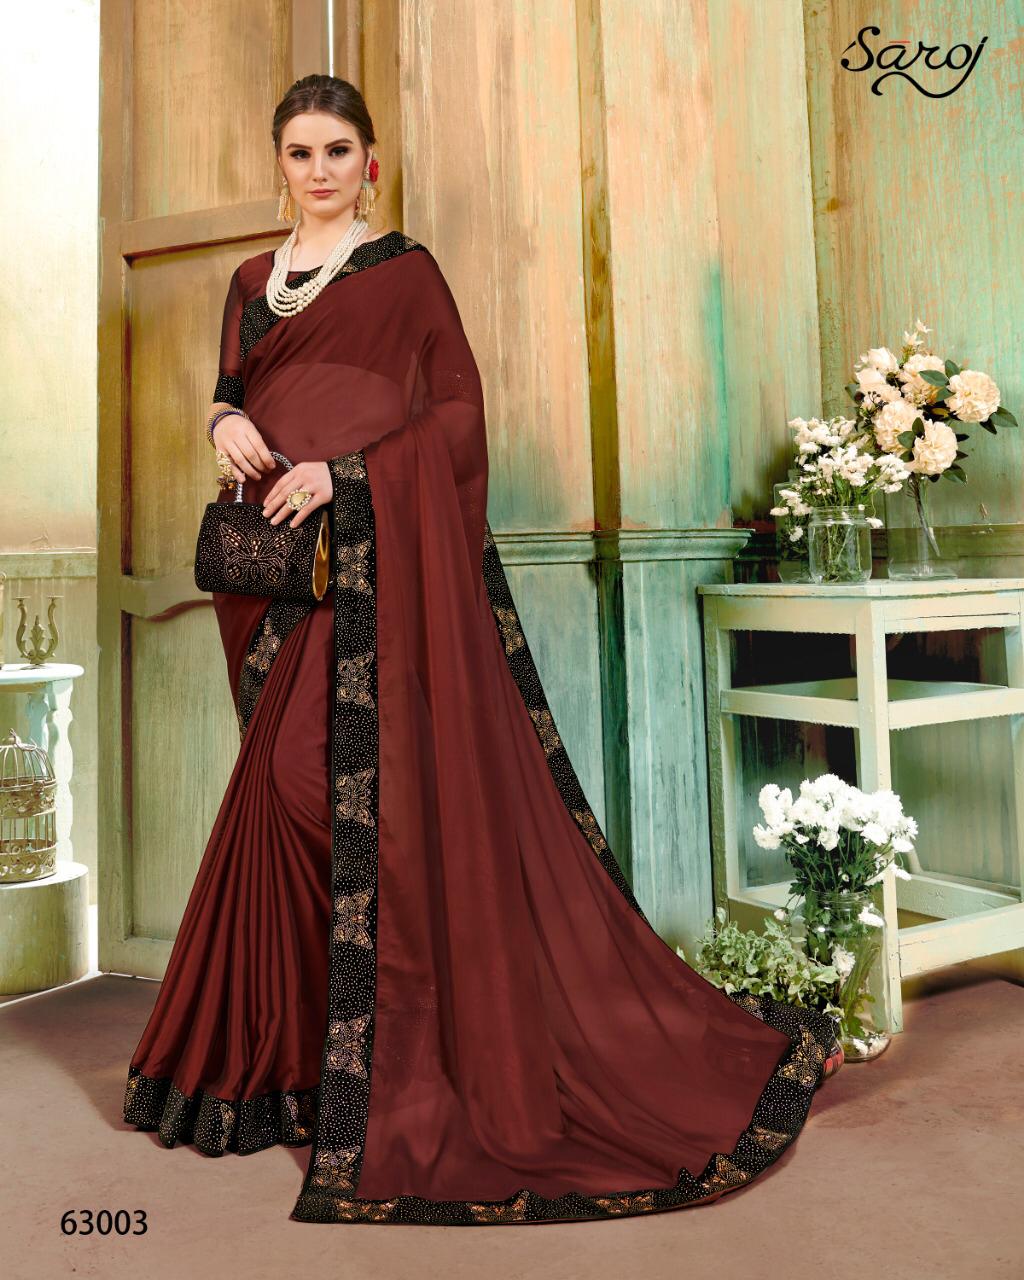 Saroj Sapphire amazing style sarees in factory prices